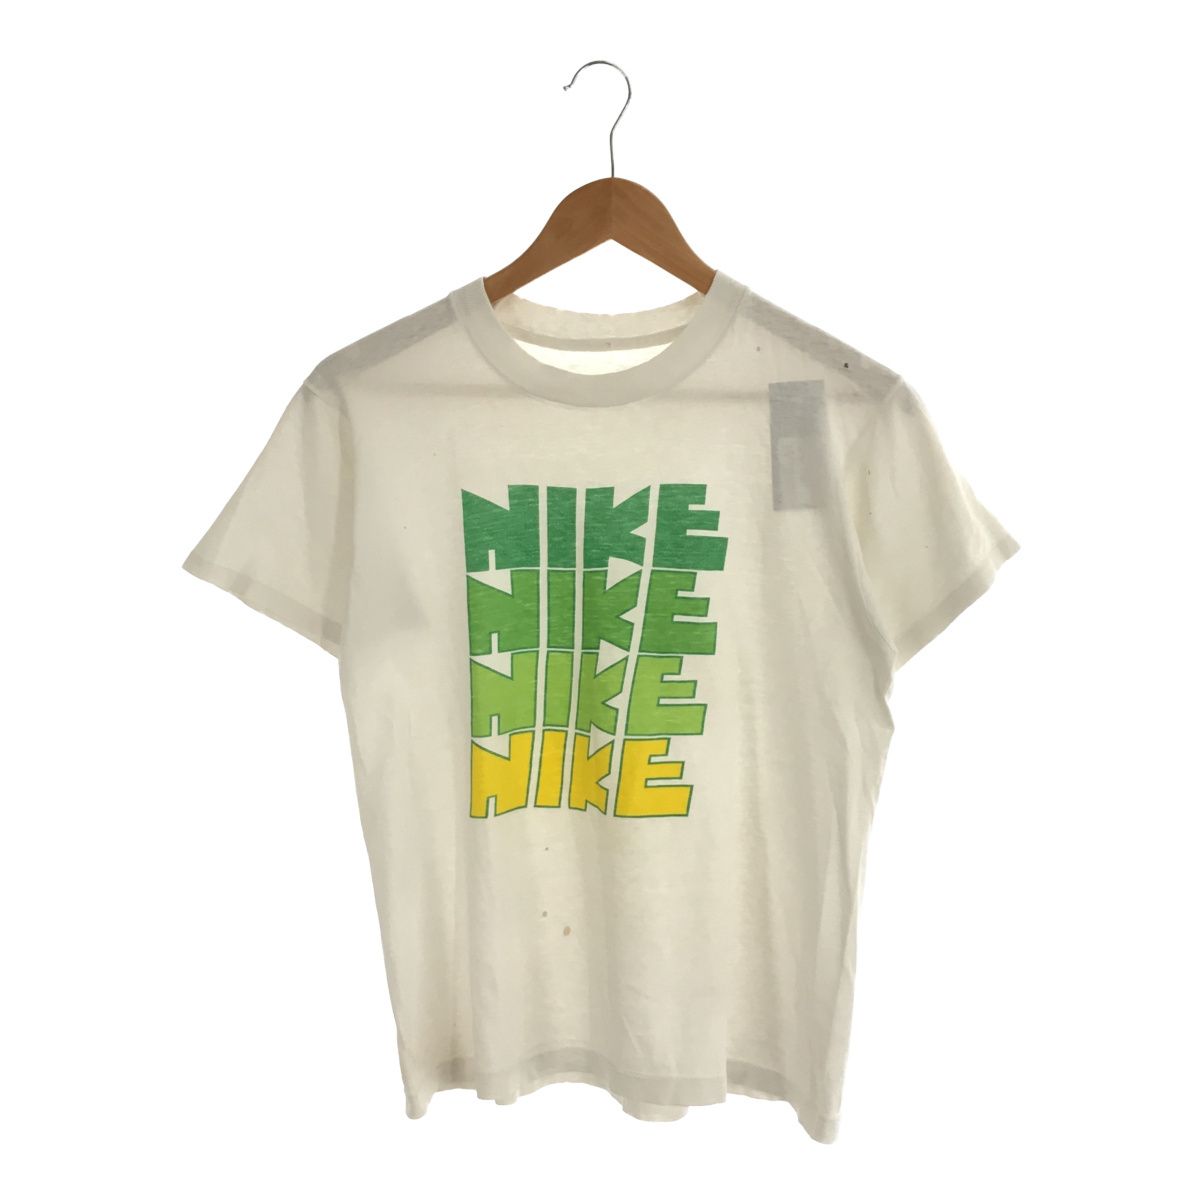 NIKE 4連ゴツナイキ 染み込みプリントtシャツ-